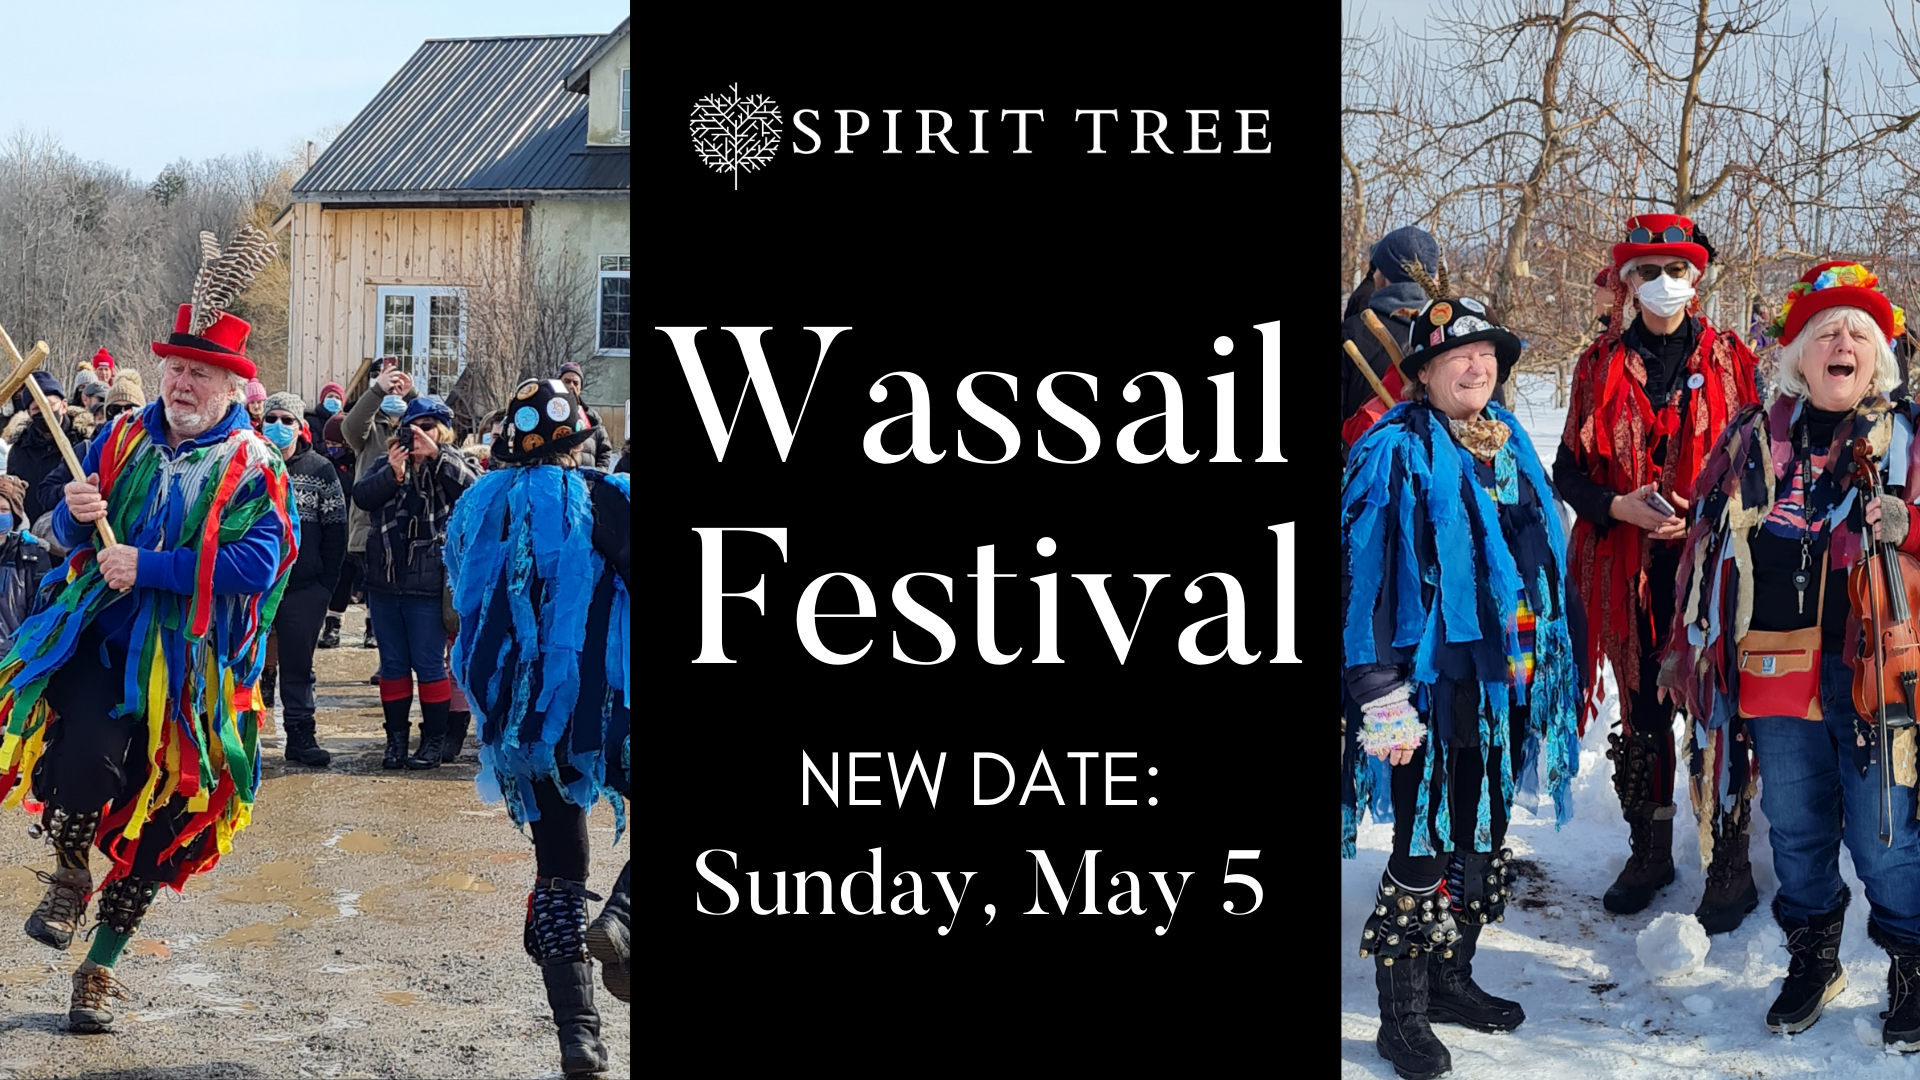 Wassail Festival at Spirit Tree